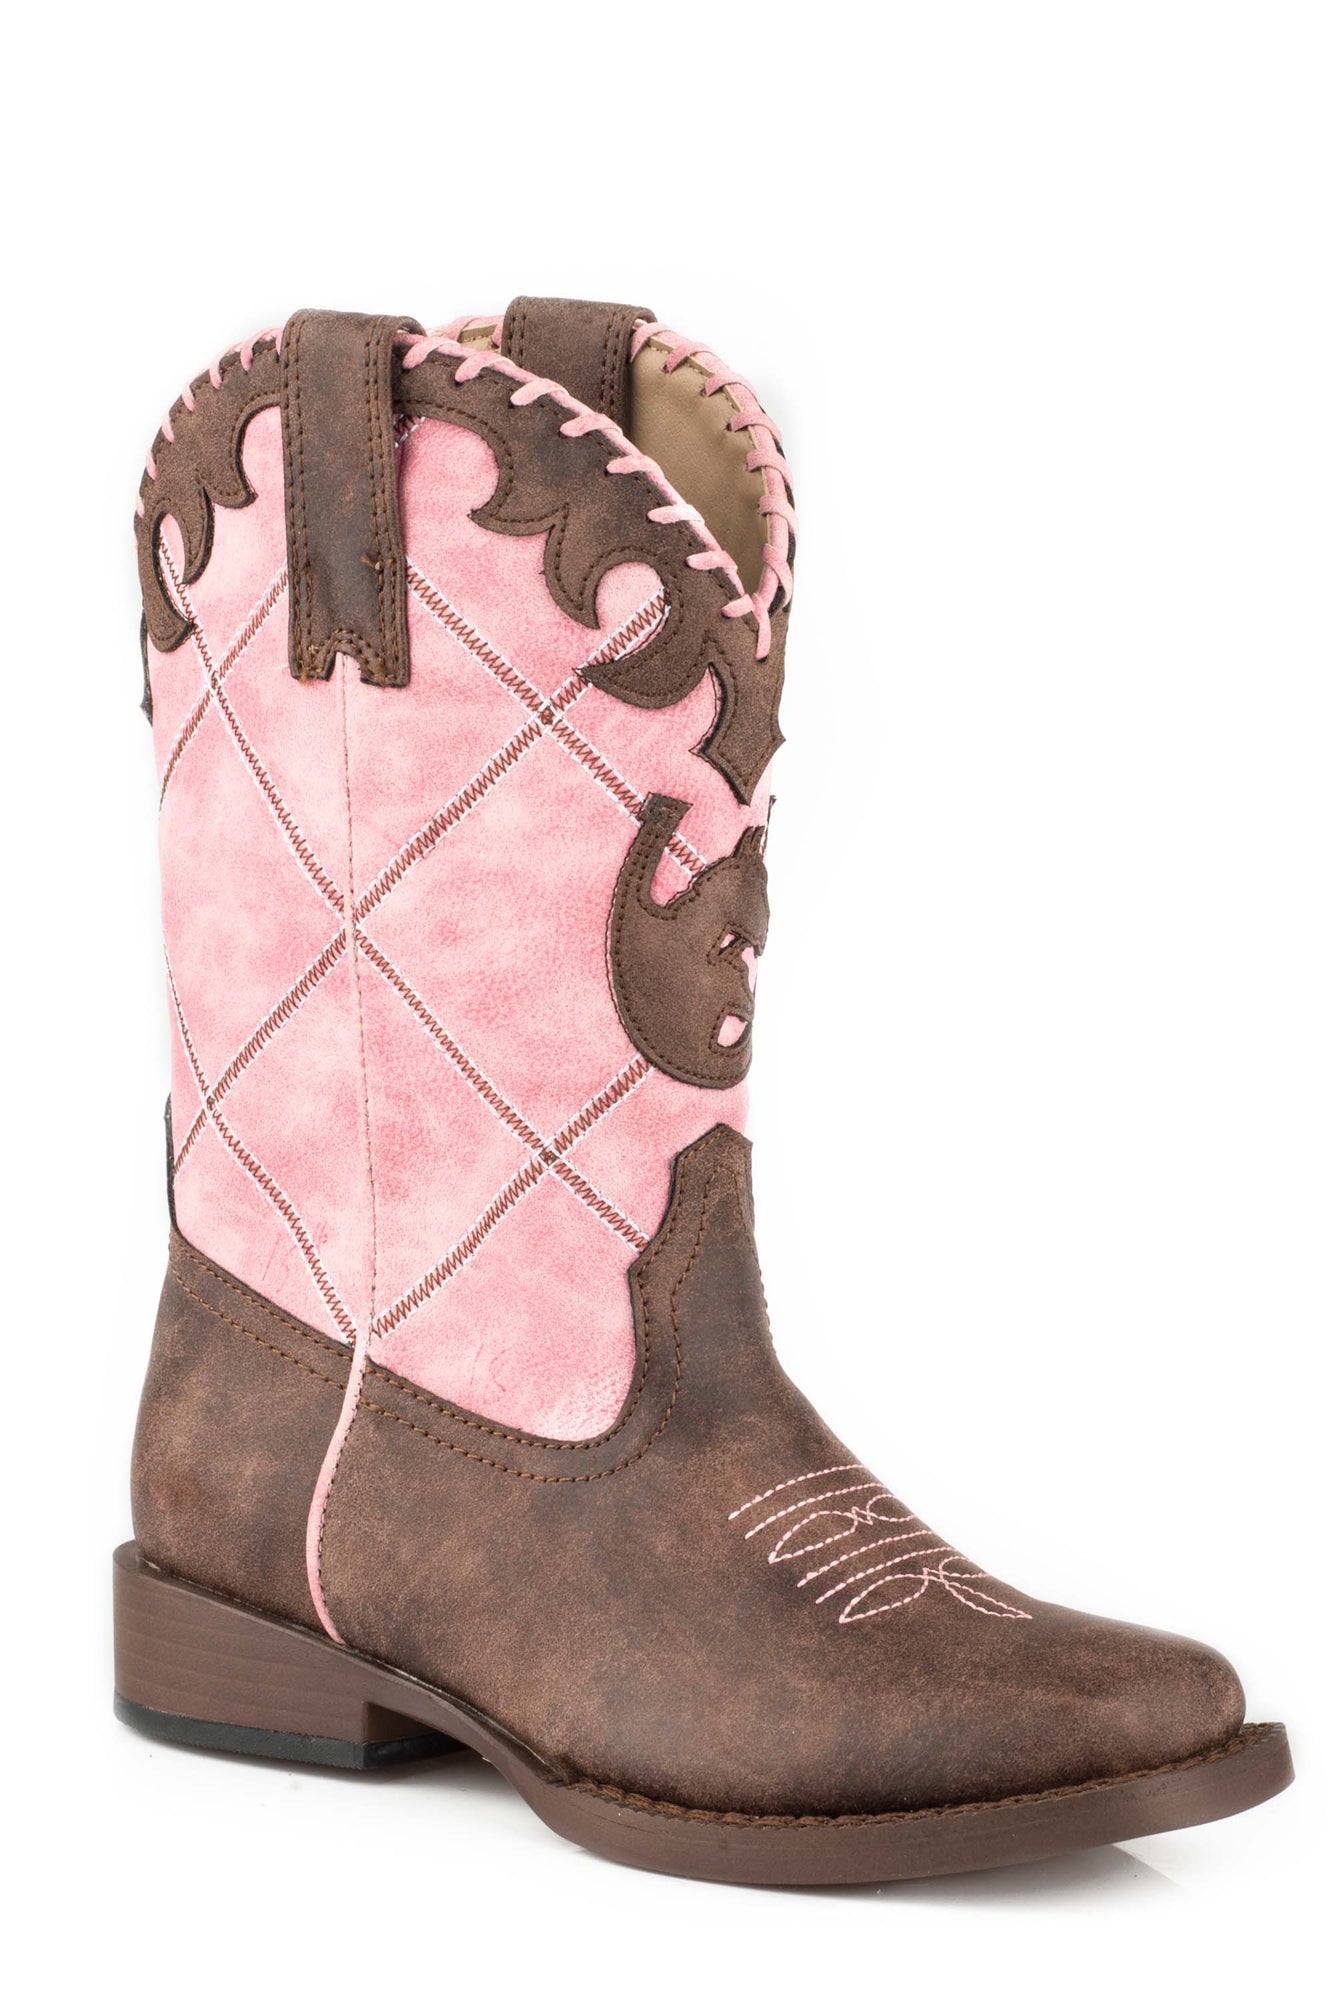 cowboy boots pink